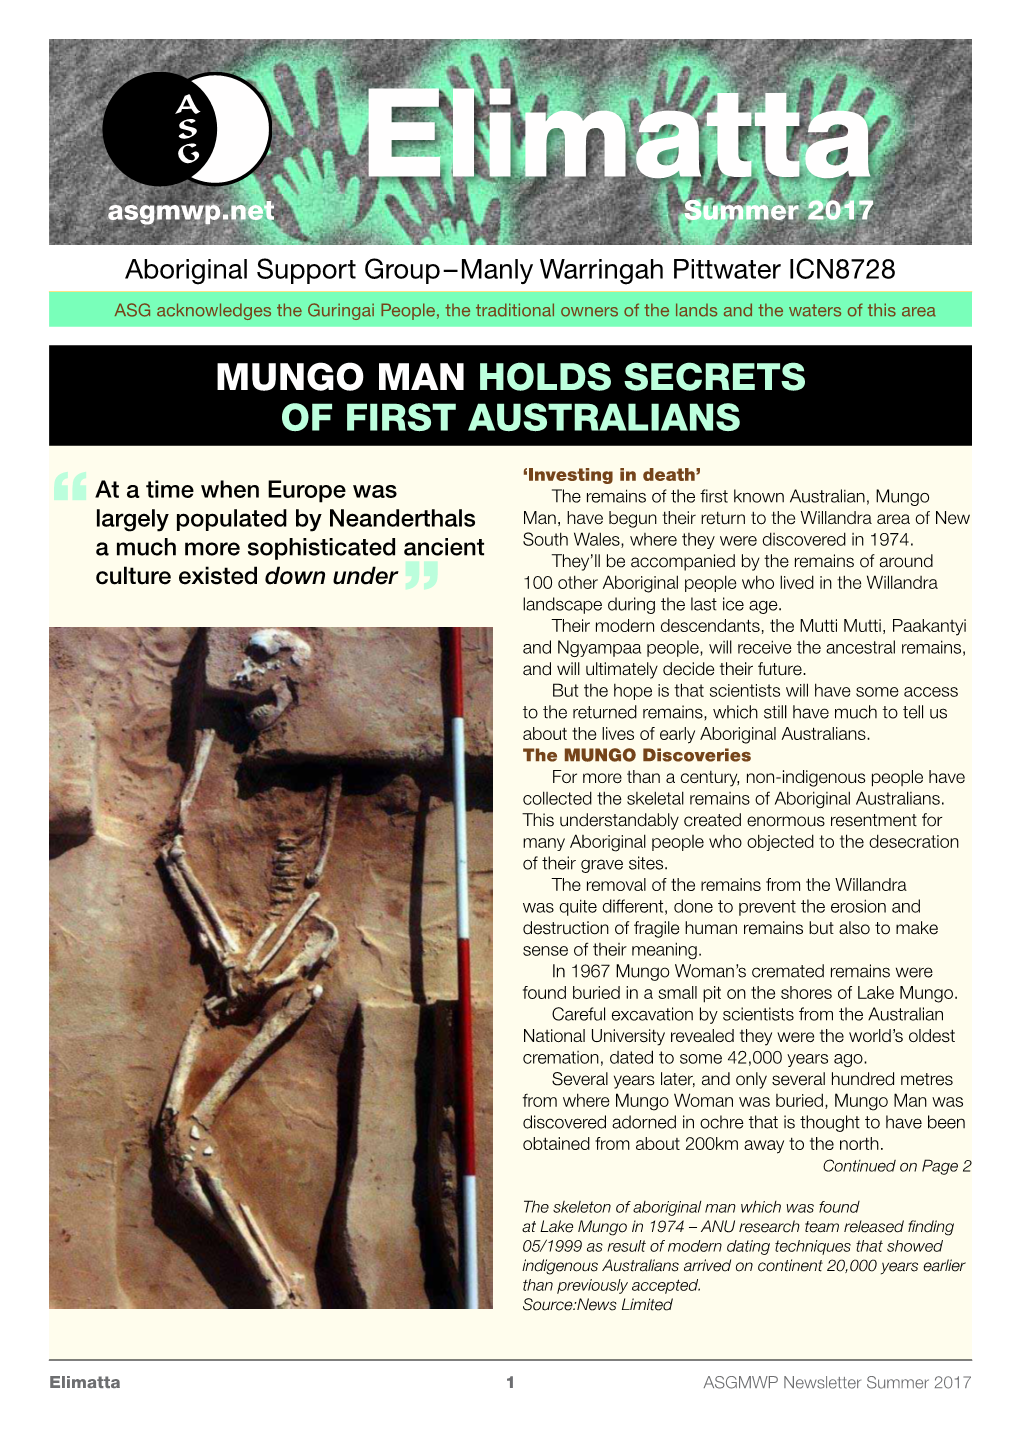 Mungo Man Holds Secrets of First Australians